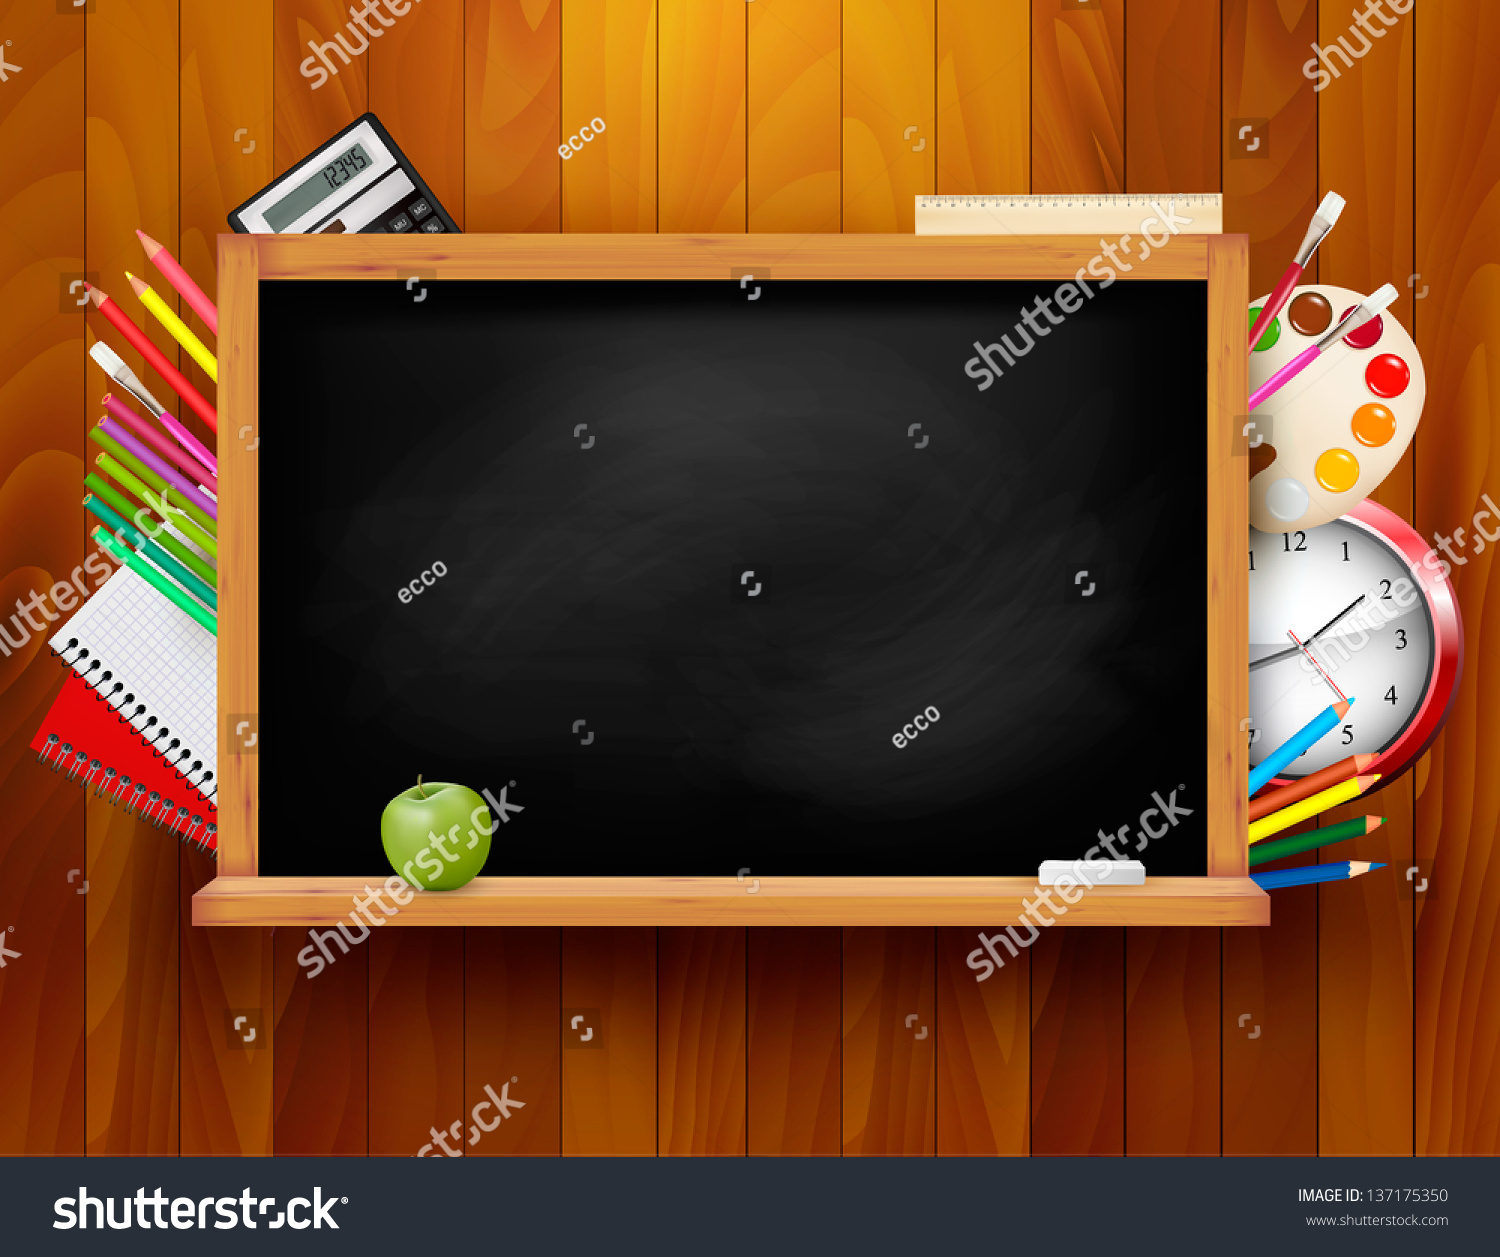 Blackboard With School Supplies On Wooden Background. Vector ...